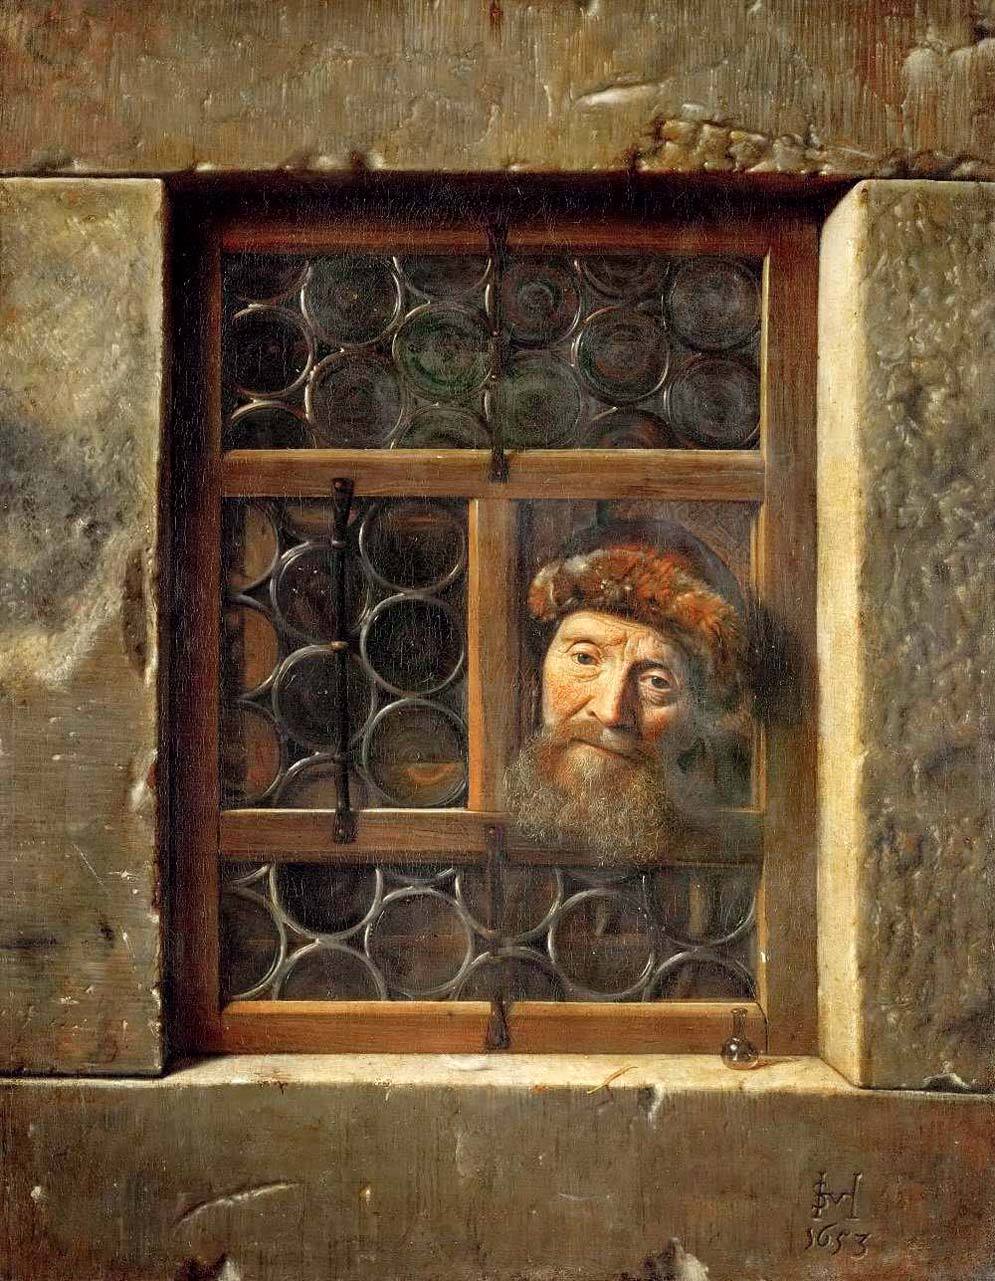 artiebagagli:
“Samuel Dirksz van Hoogstraten - Man at a Window (1653)
”